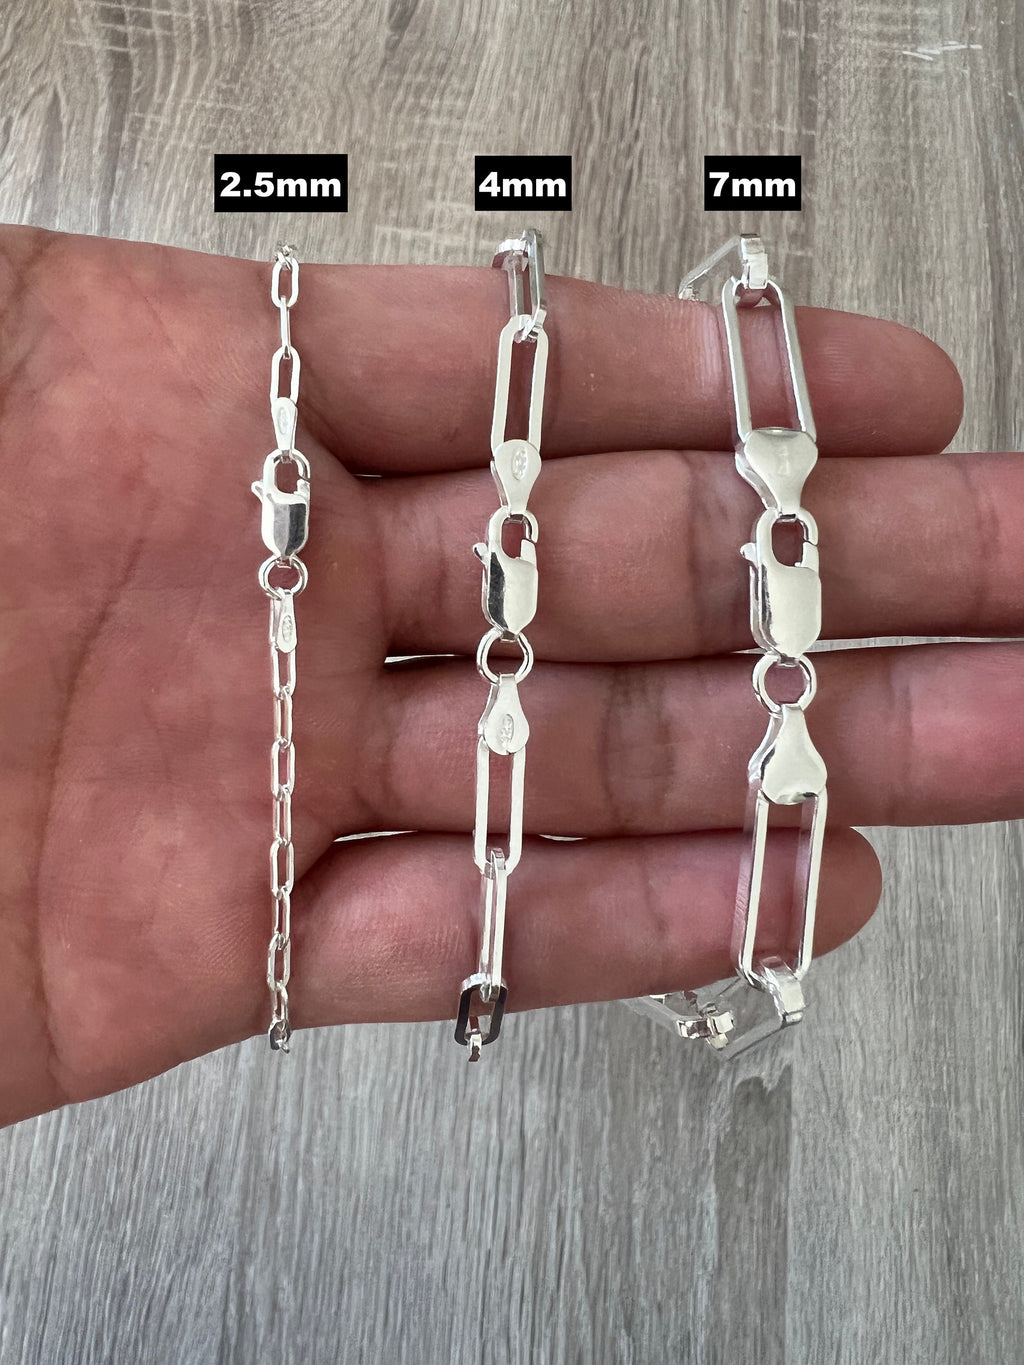 4mm 925 Silver Rope Chain Necklace Sterling Silver 16 18 20 22 24 26 28 30  inch italian unisex men women woman man